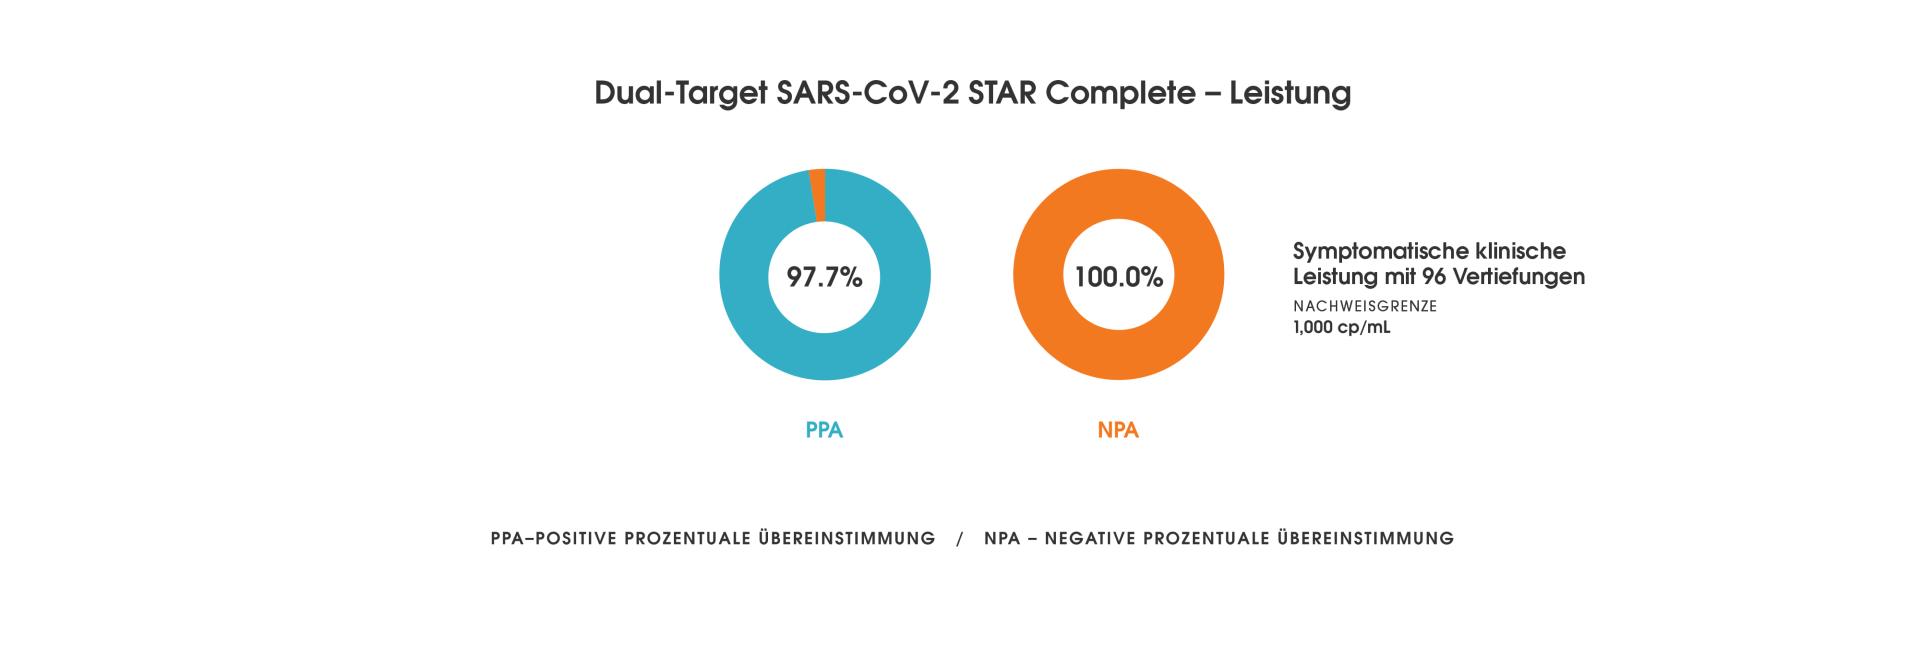 Dual-Target SARS-CoV-2 STAR Complete - Leistung des Tests